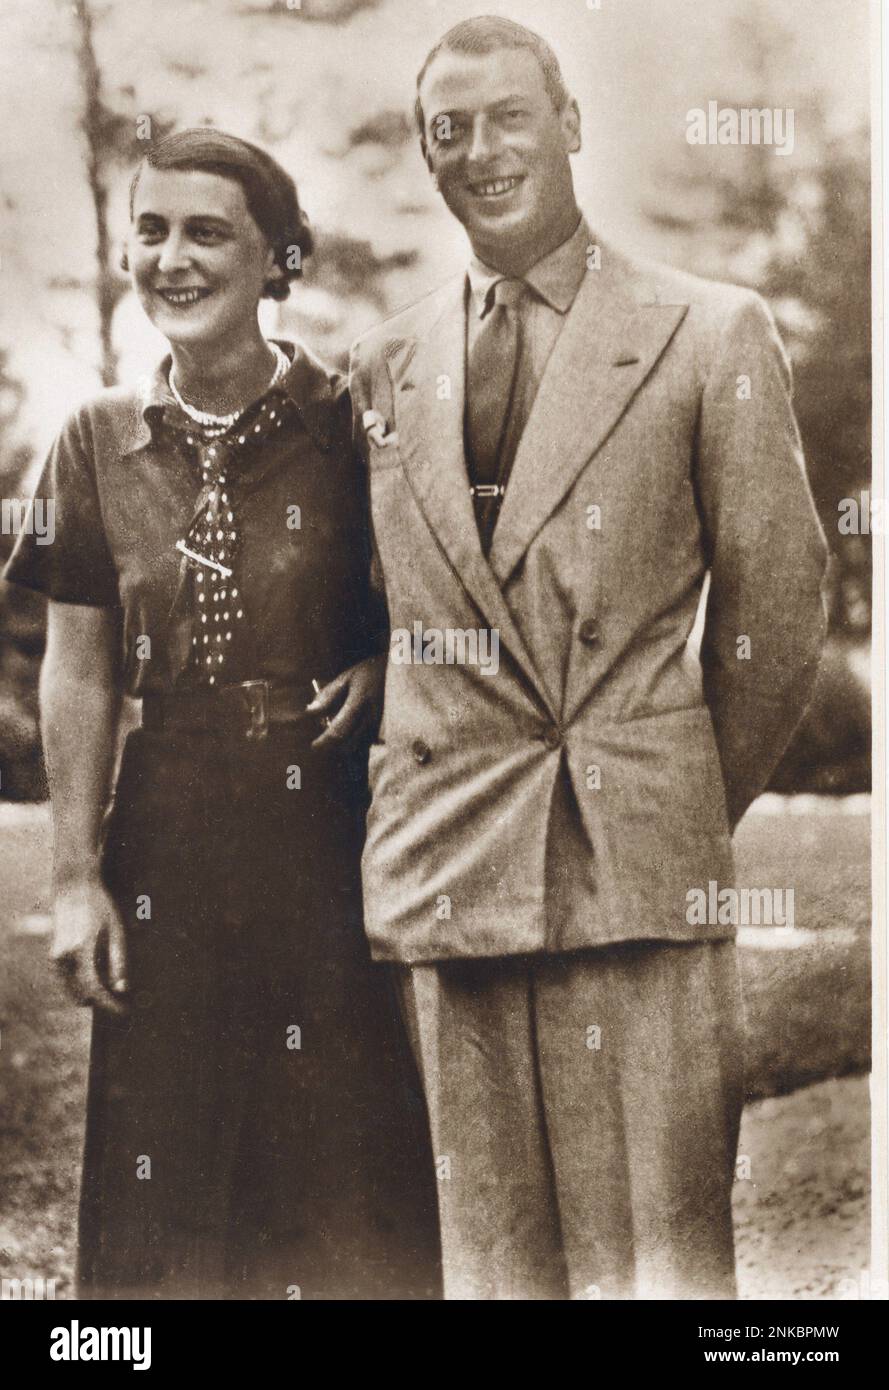 1940 aprox. : El príncipe real JORGE de Gales (después del duque de KENT ( 1902 - 1942 ) con la princesa MARINA de Grecia y Dinamarca ( 1906 - 1968 ). Hijo del rey Jorge V de Inglaterra ( 1865 - 1936 ) . Foto de Dorothy Wilding - familia - famiglia - ritratto - retrato - REALEZA - REALI - Nobiltà - nobleza - WINDSOR - corbata - cravatta - pochette - fazzoletto nel taschino - collar de perlas - perle - collana - poi - polkadots - foulard - sonrisa - sorriso ---- Archivio GBB Foto de stock